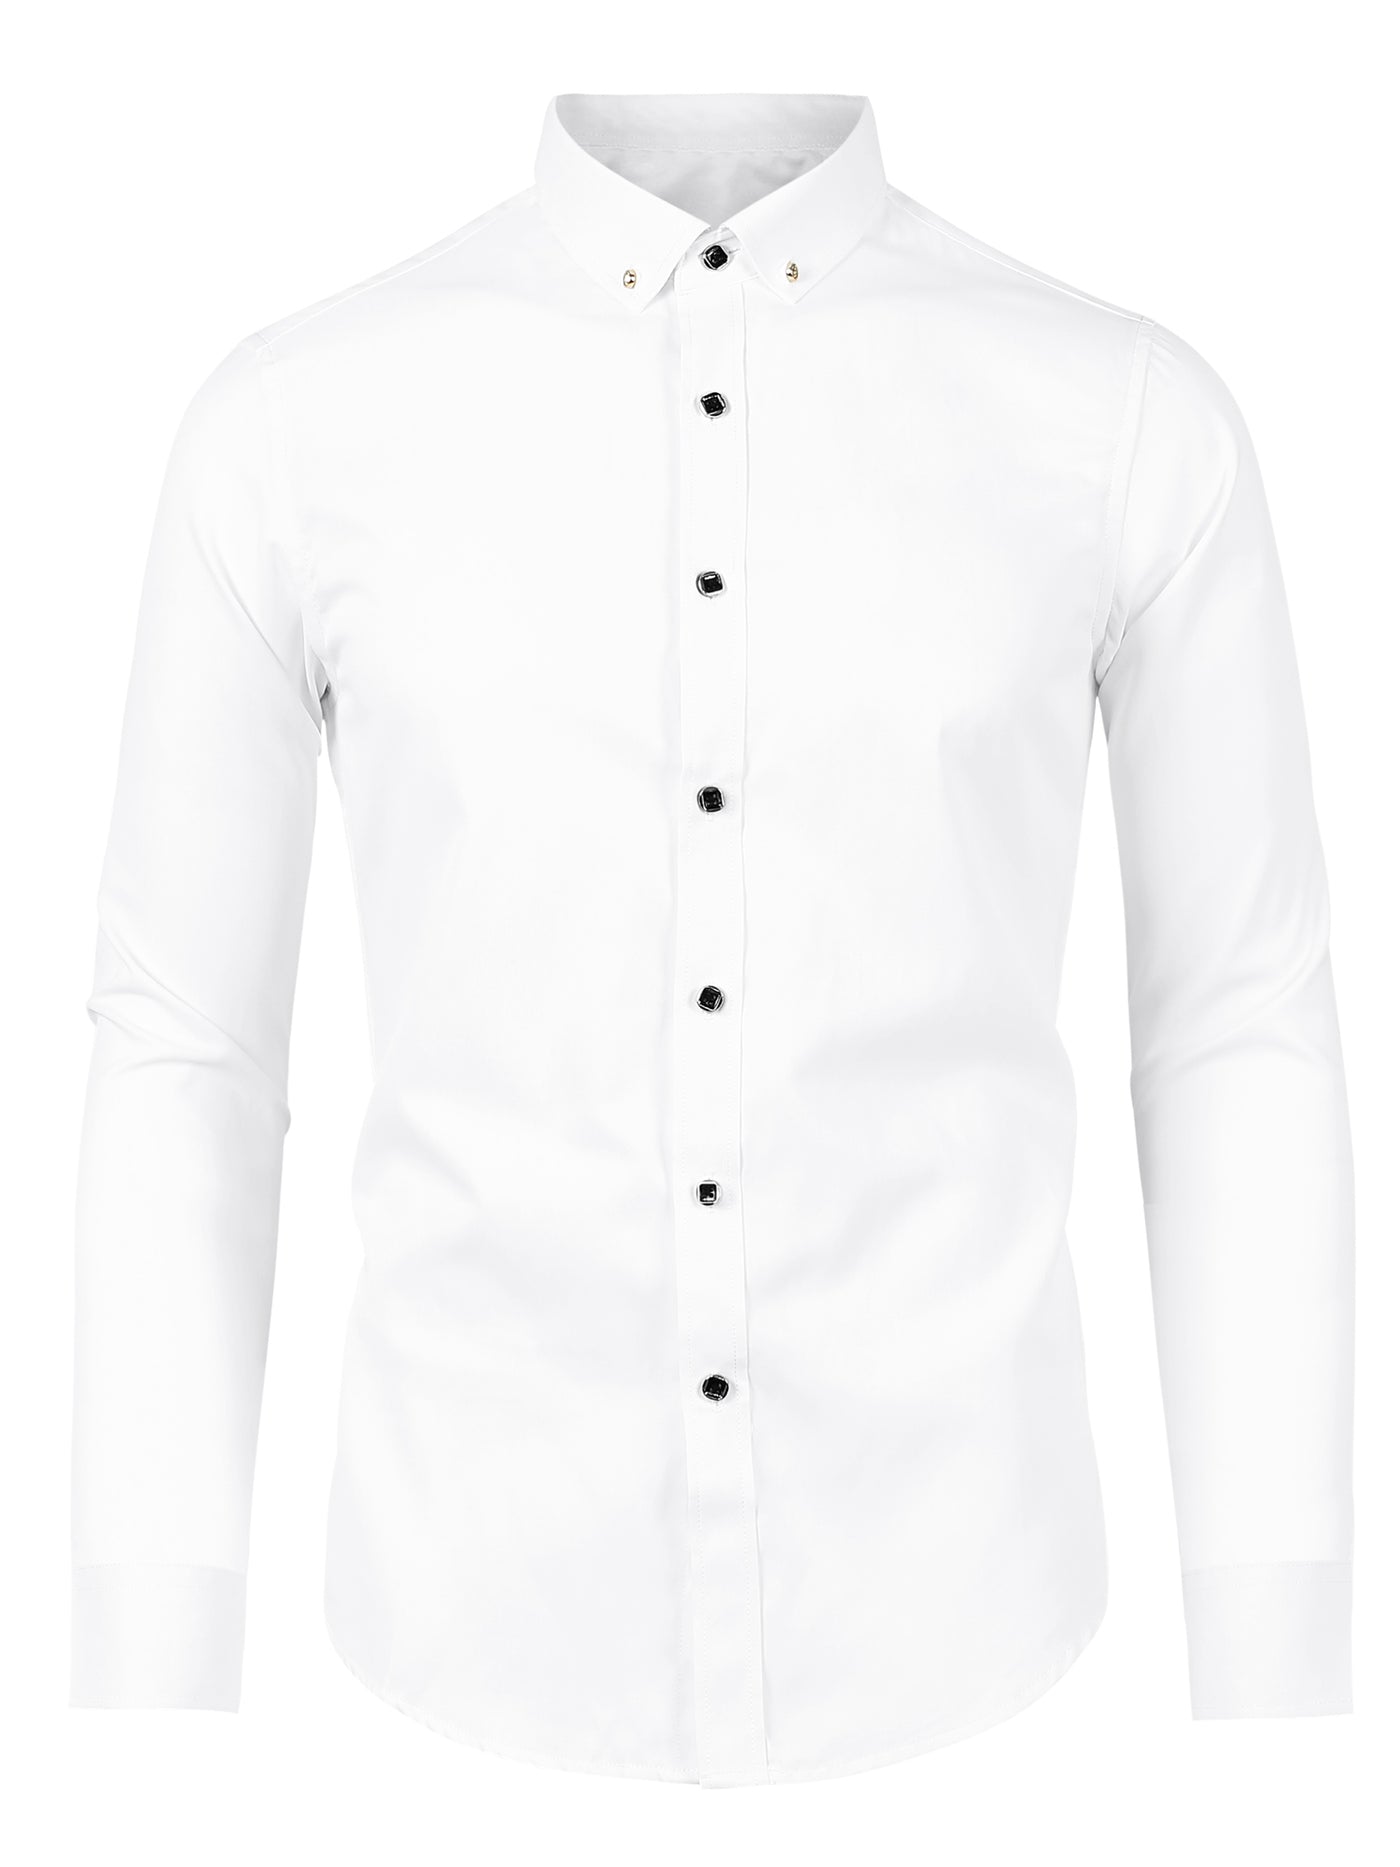 Bublédon Solid Color Button Down Long Sleeve Business Shirt